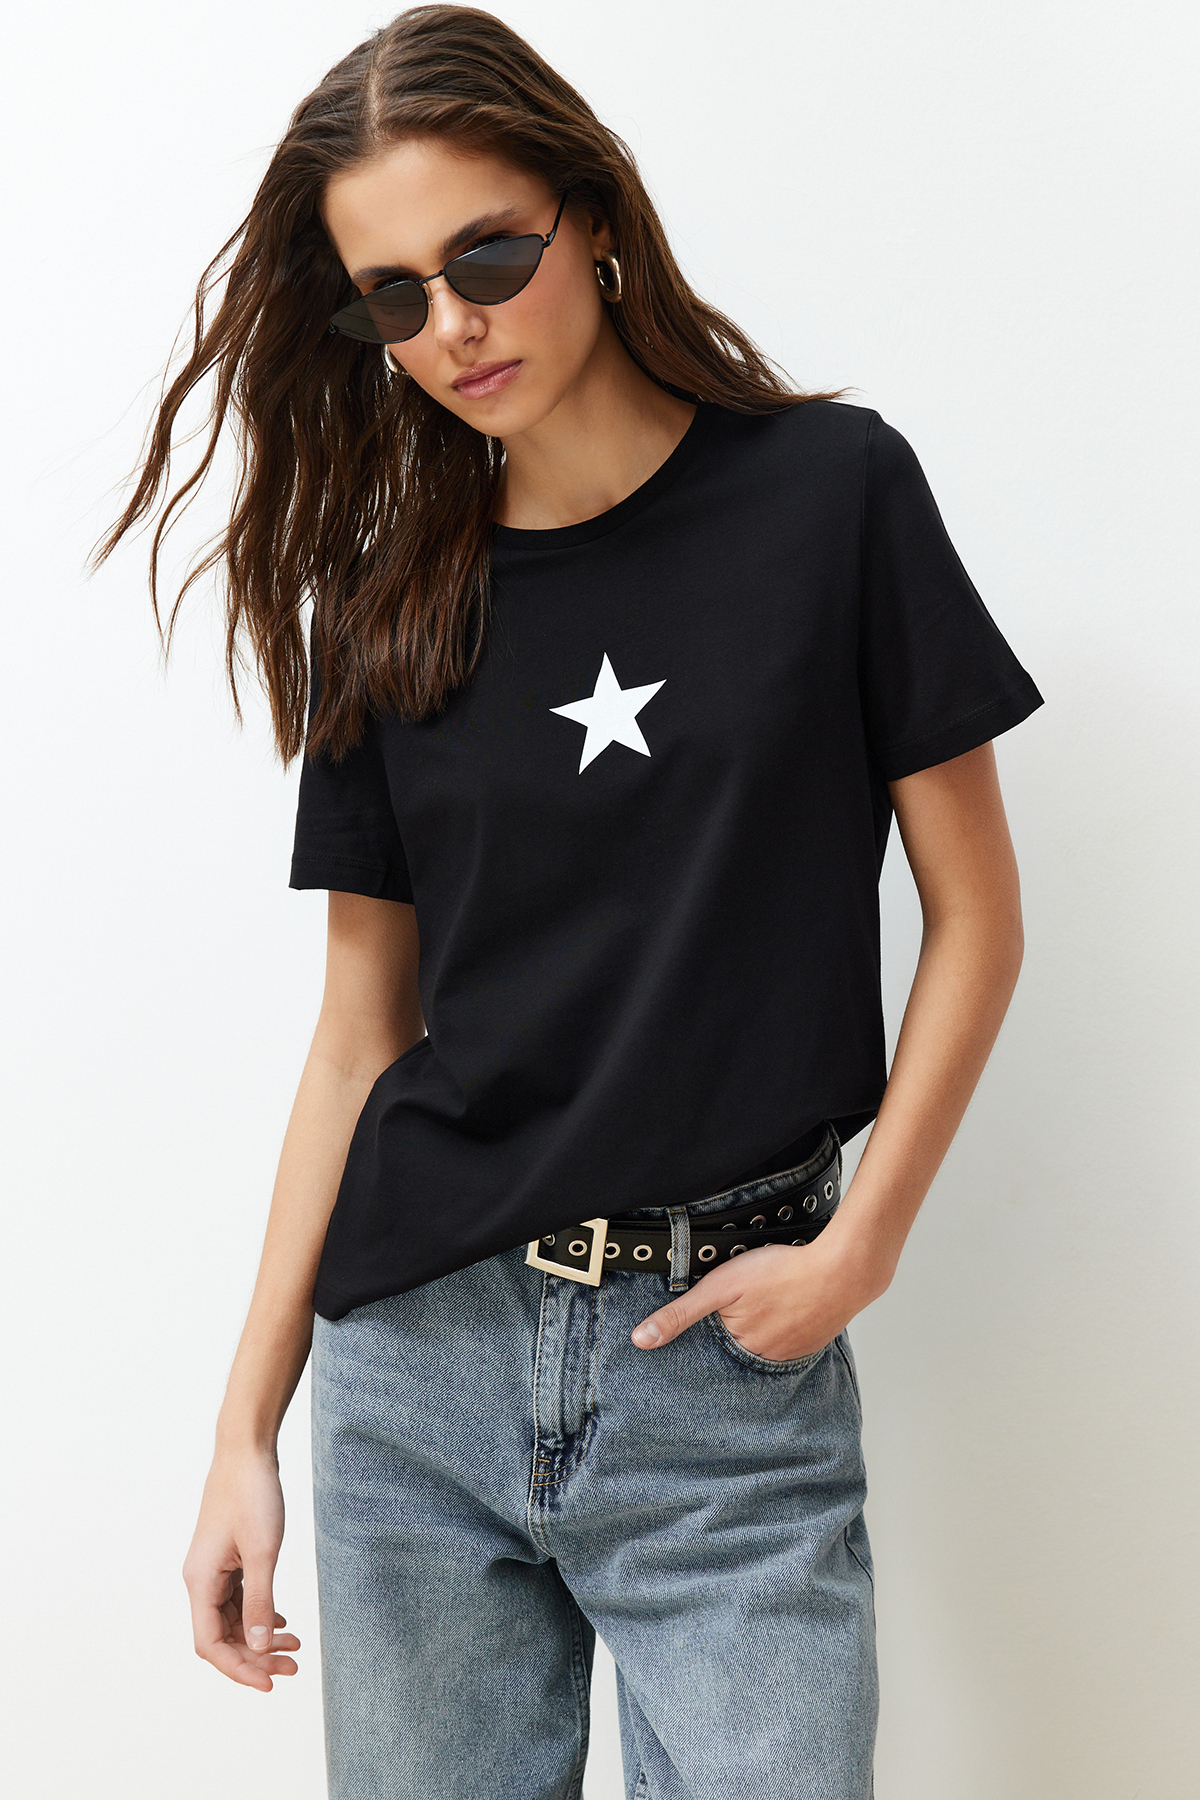 Trendyol Black 100% Cotton Star Printed Regular/Regular Fit Crew Neck Knitted T-Shirt